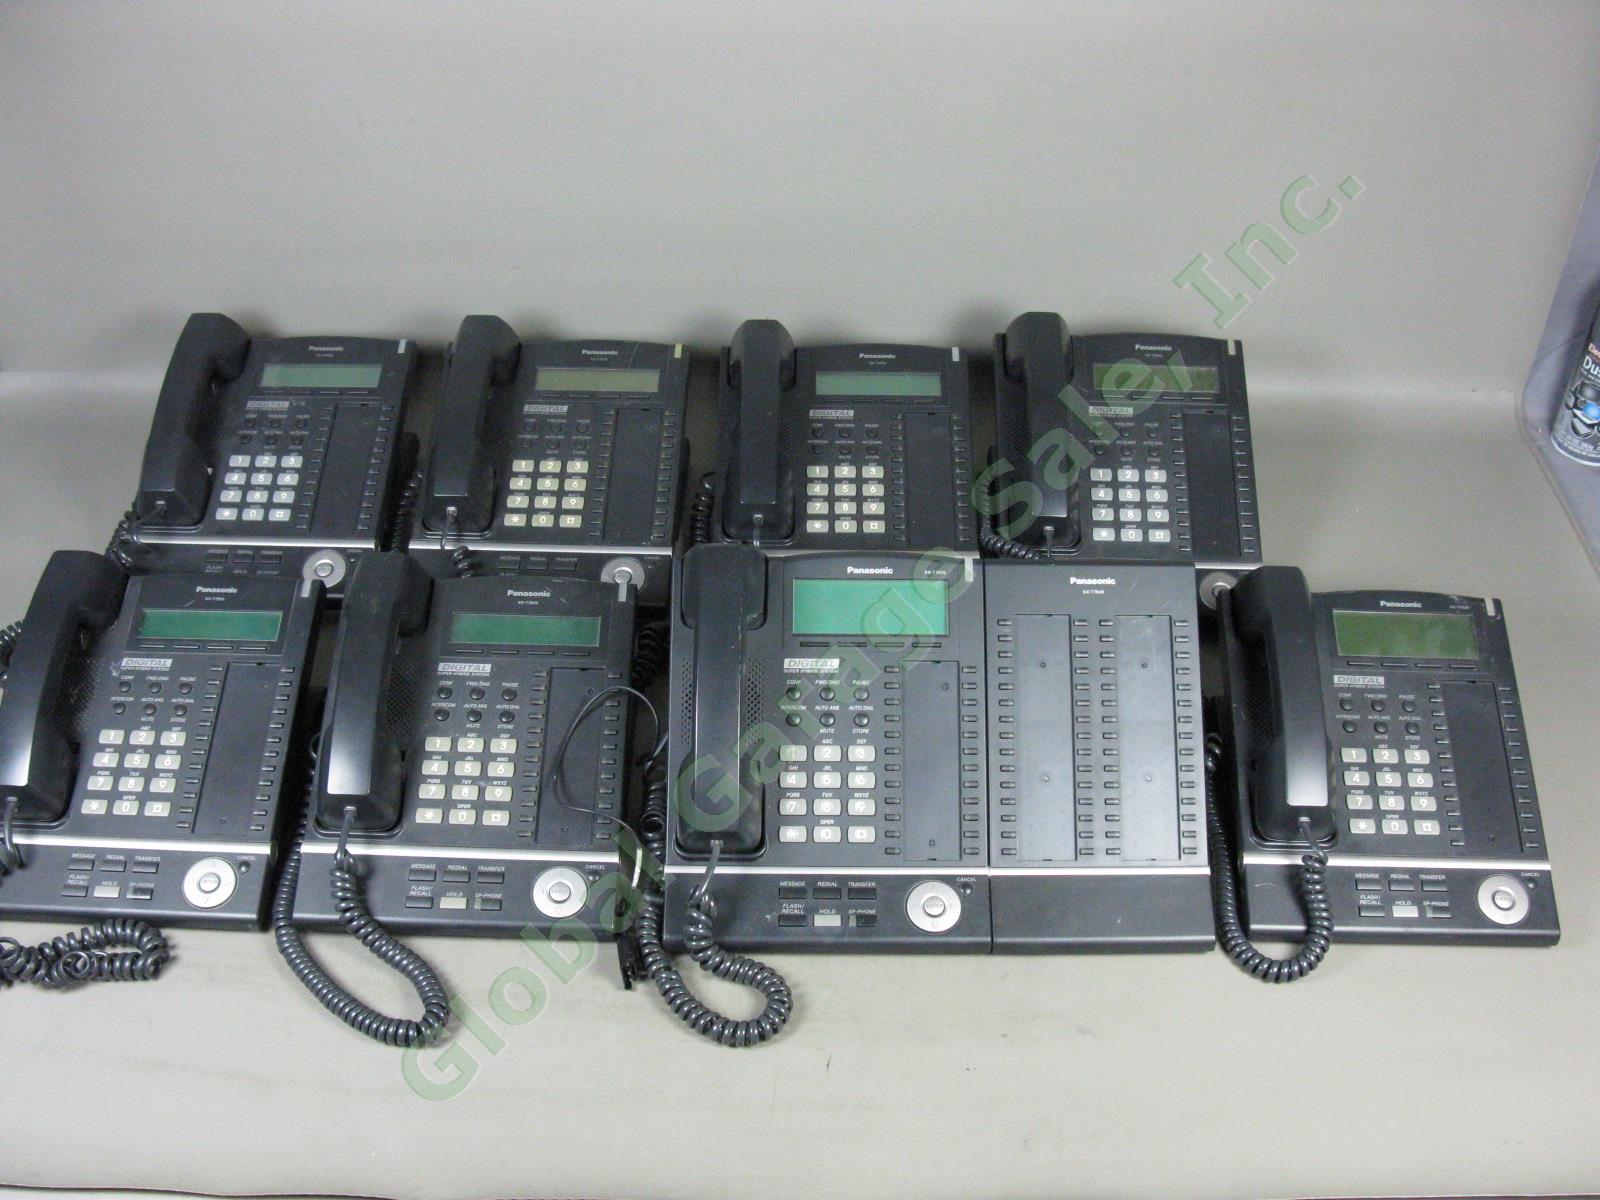 8 Panasonic KX-T7633-B KX-T7636 Business Phones System Lot KX-T7640 DSS Console